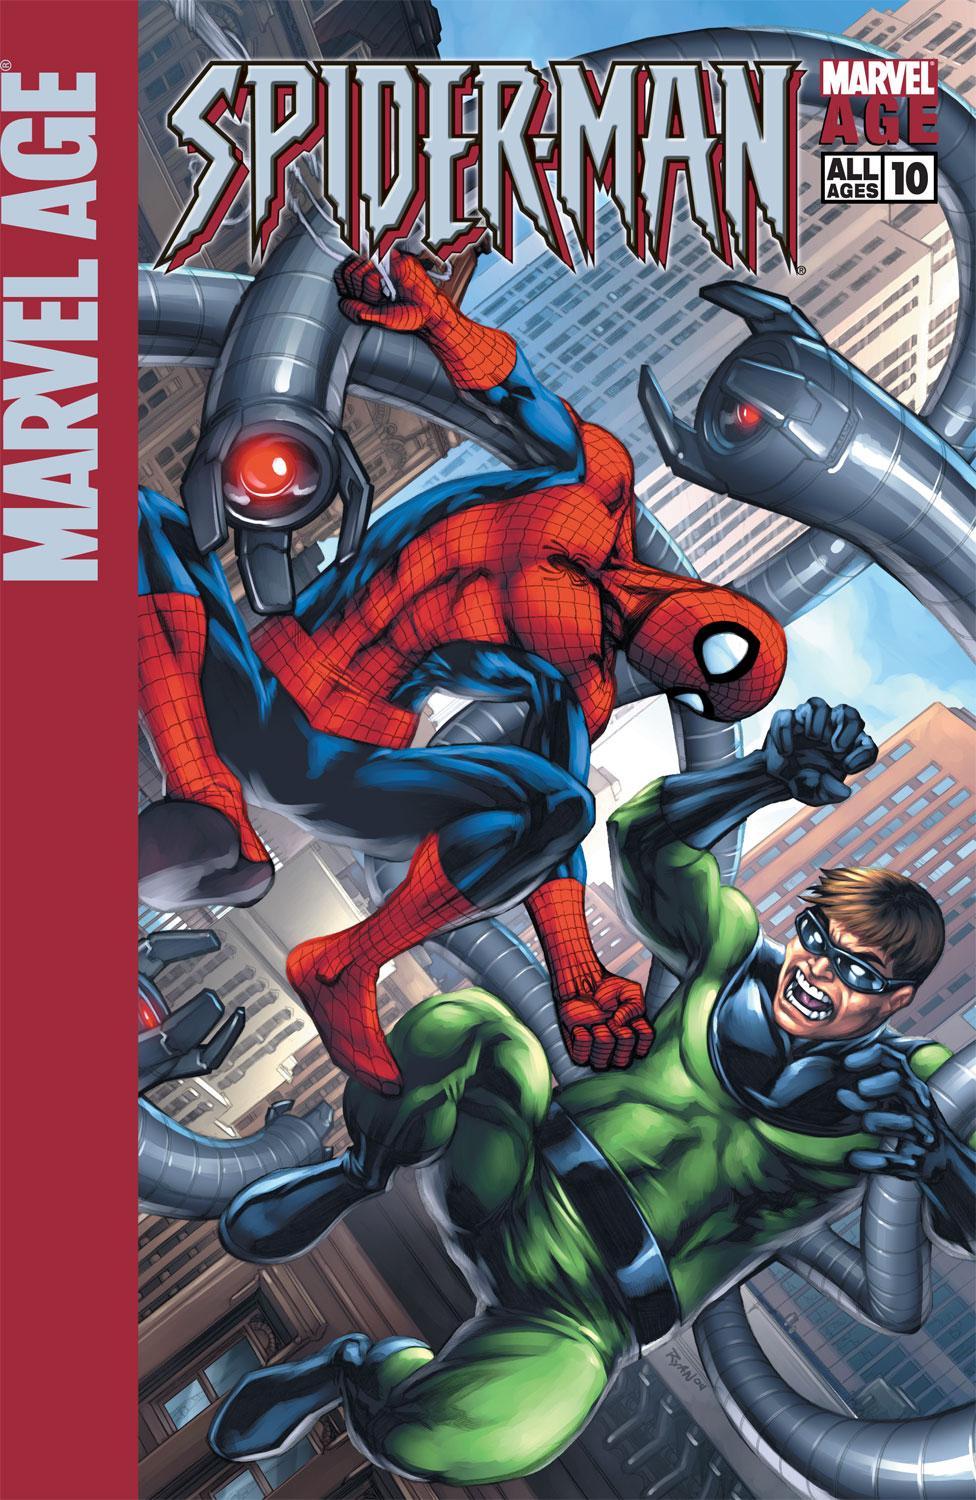 Marvel Age Spider-Man (2004) #10